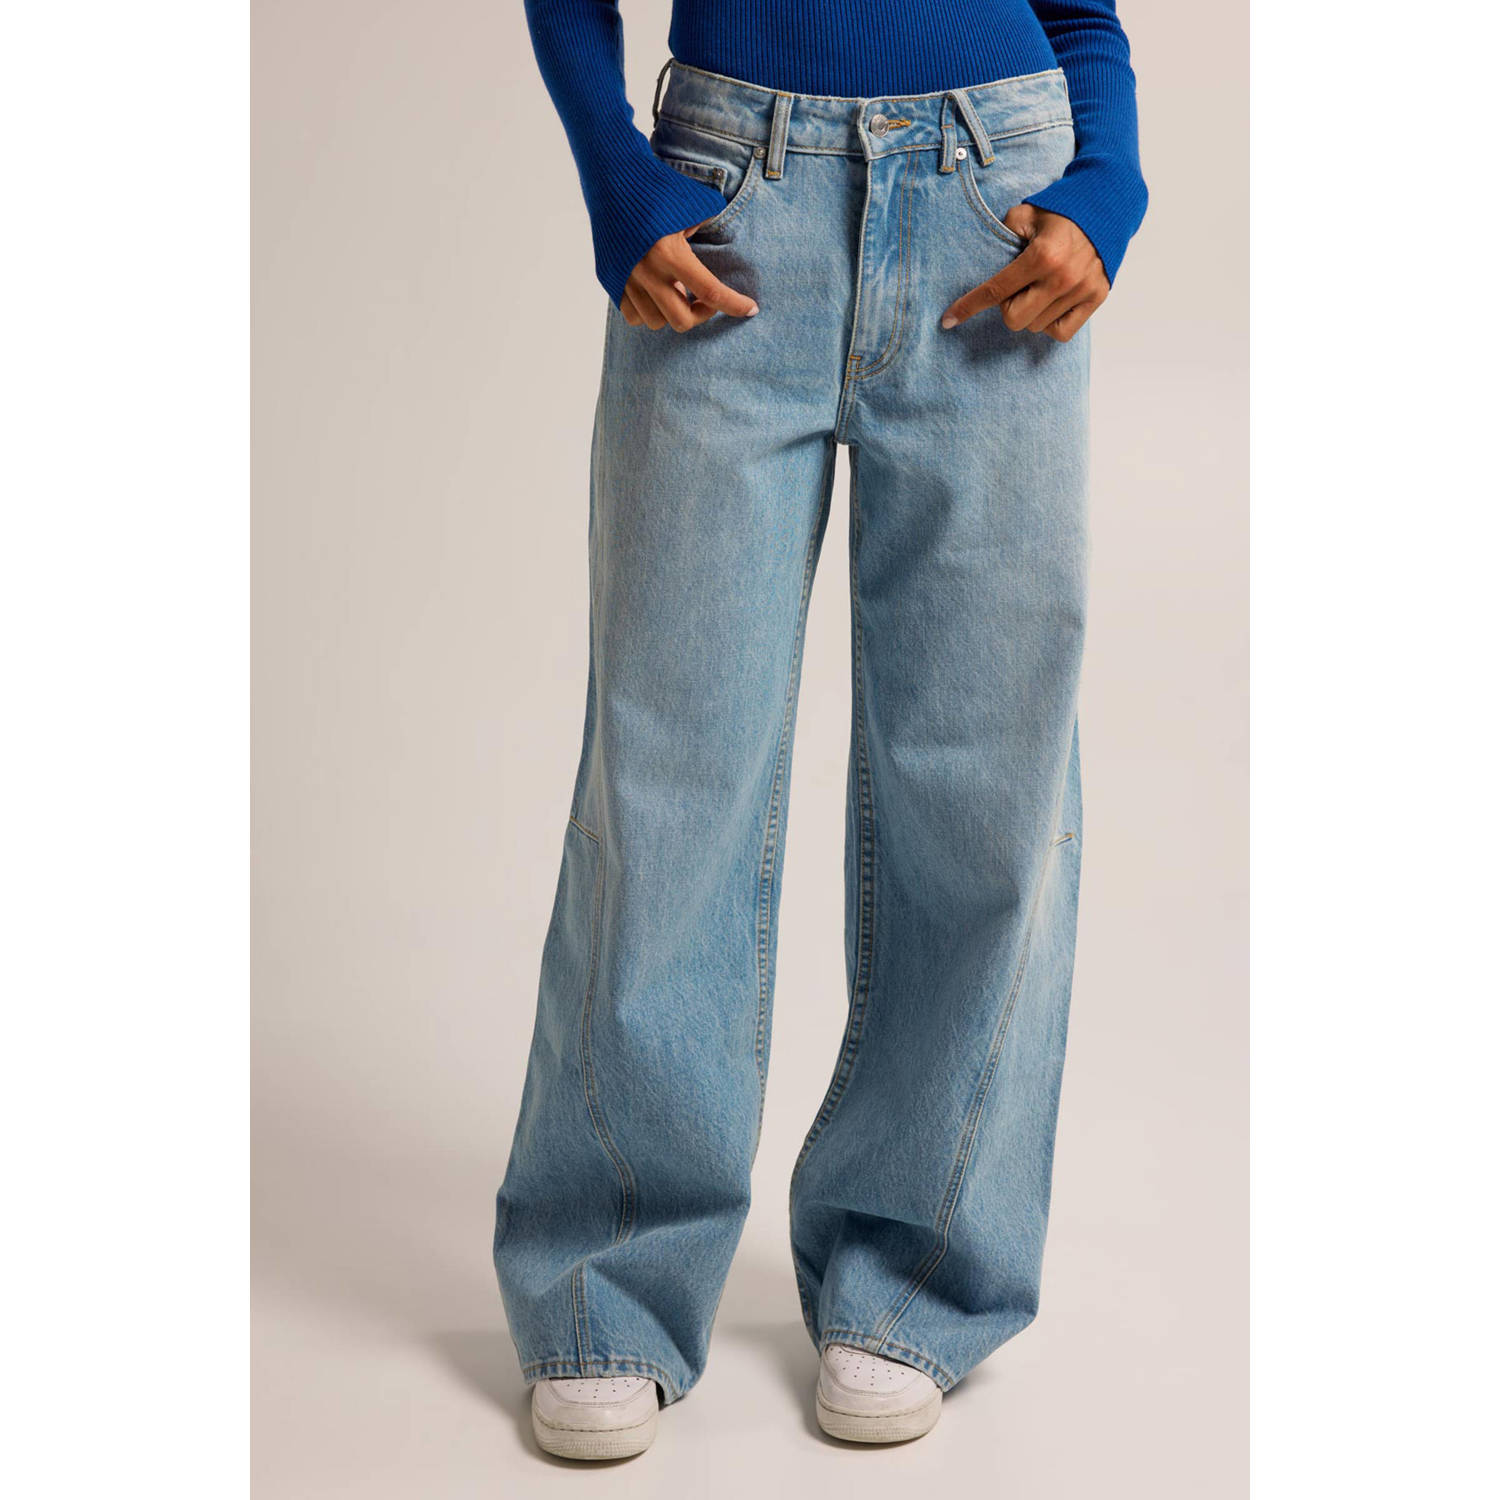 America Today jeans light blue denim